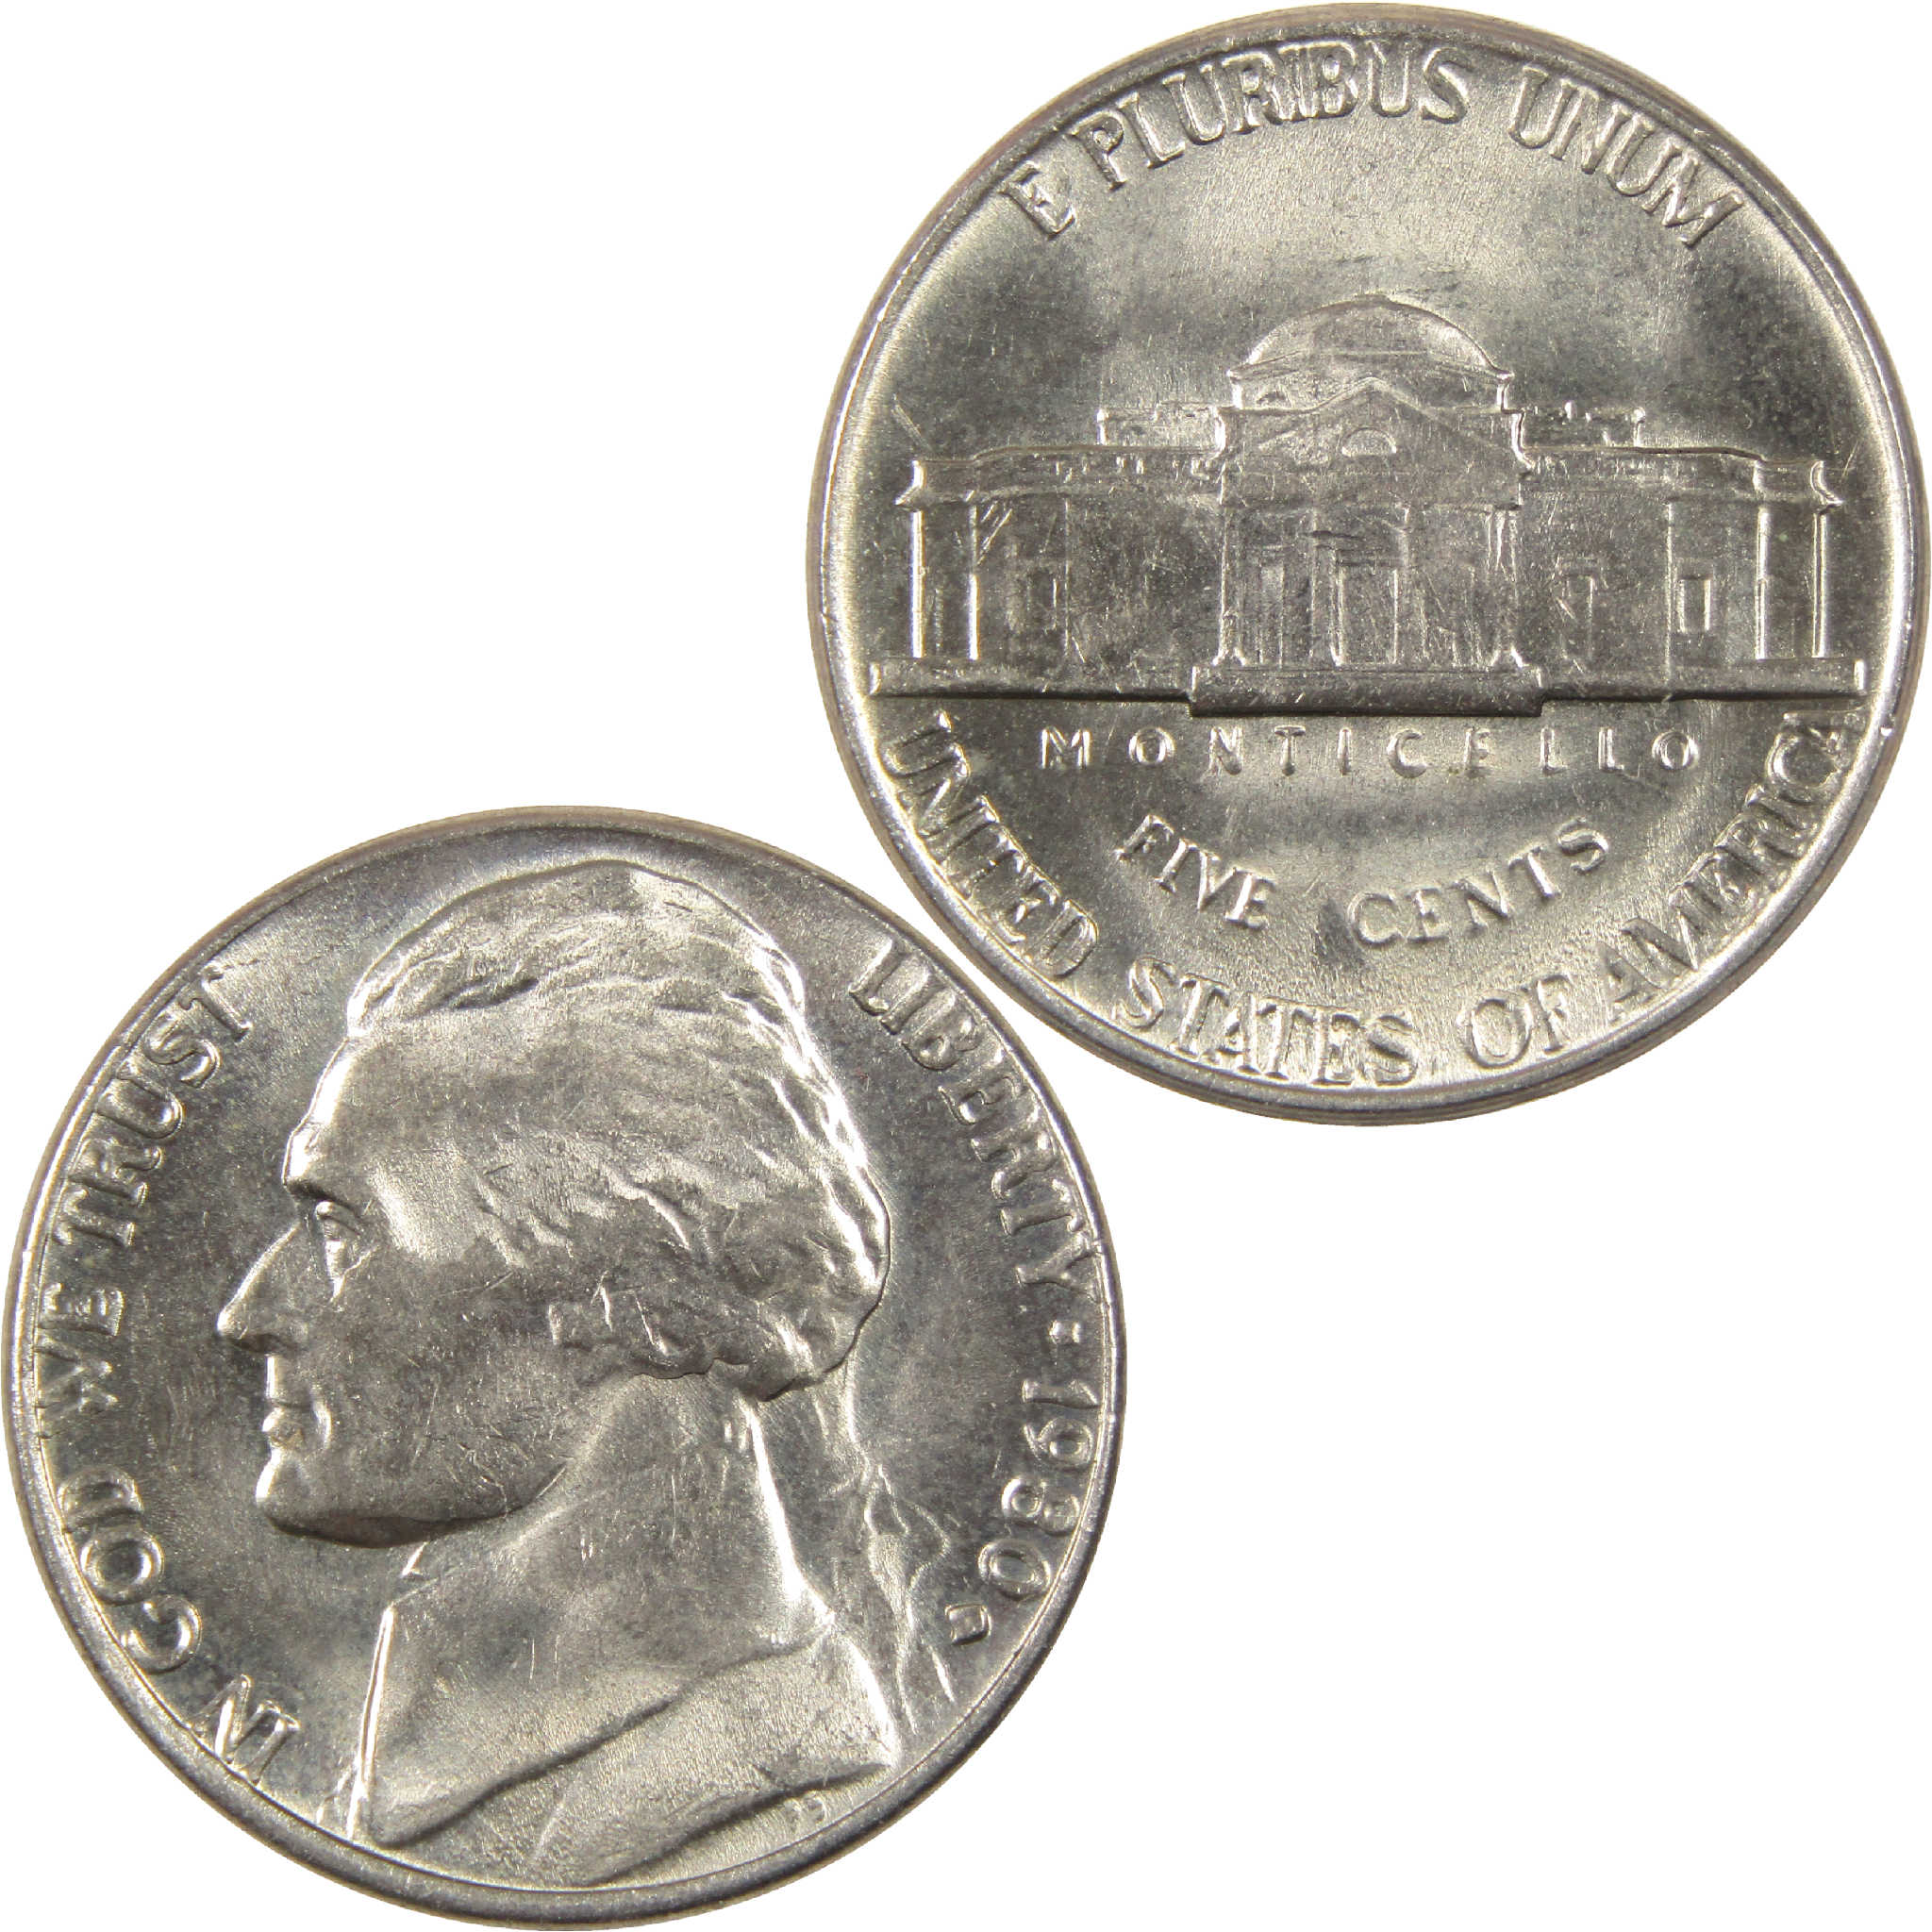 1980 D Jefferson Nickel BU Uncirculated 5c Coin